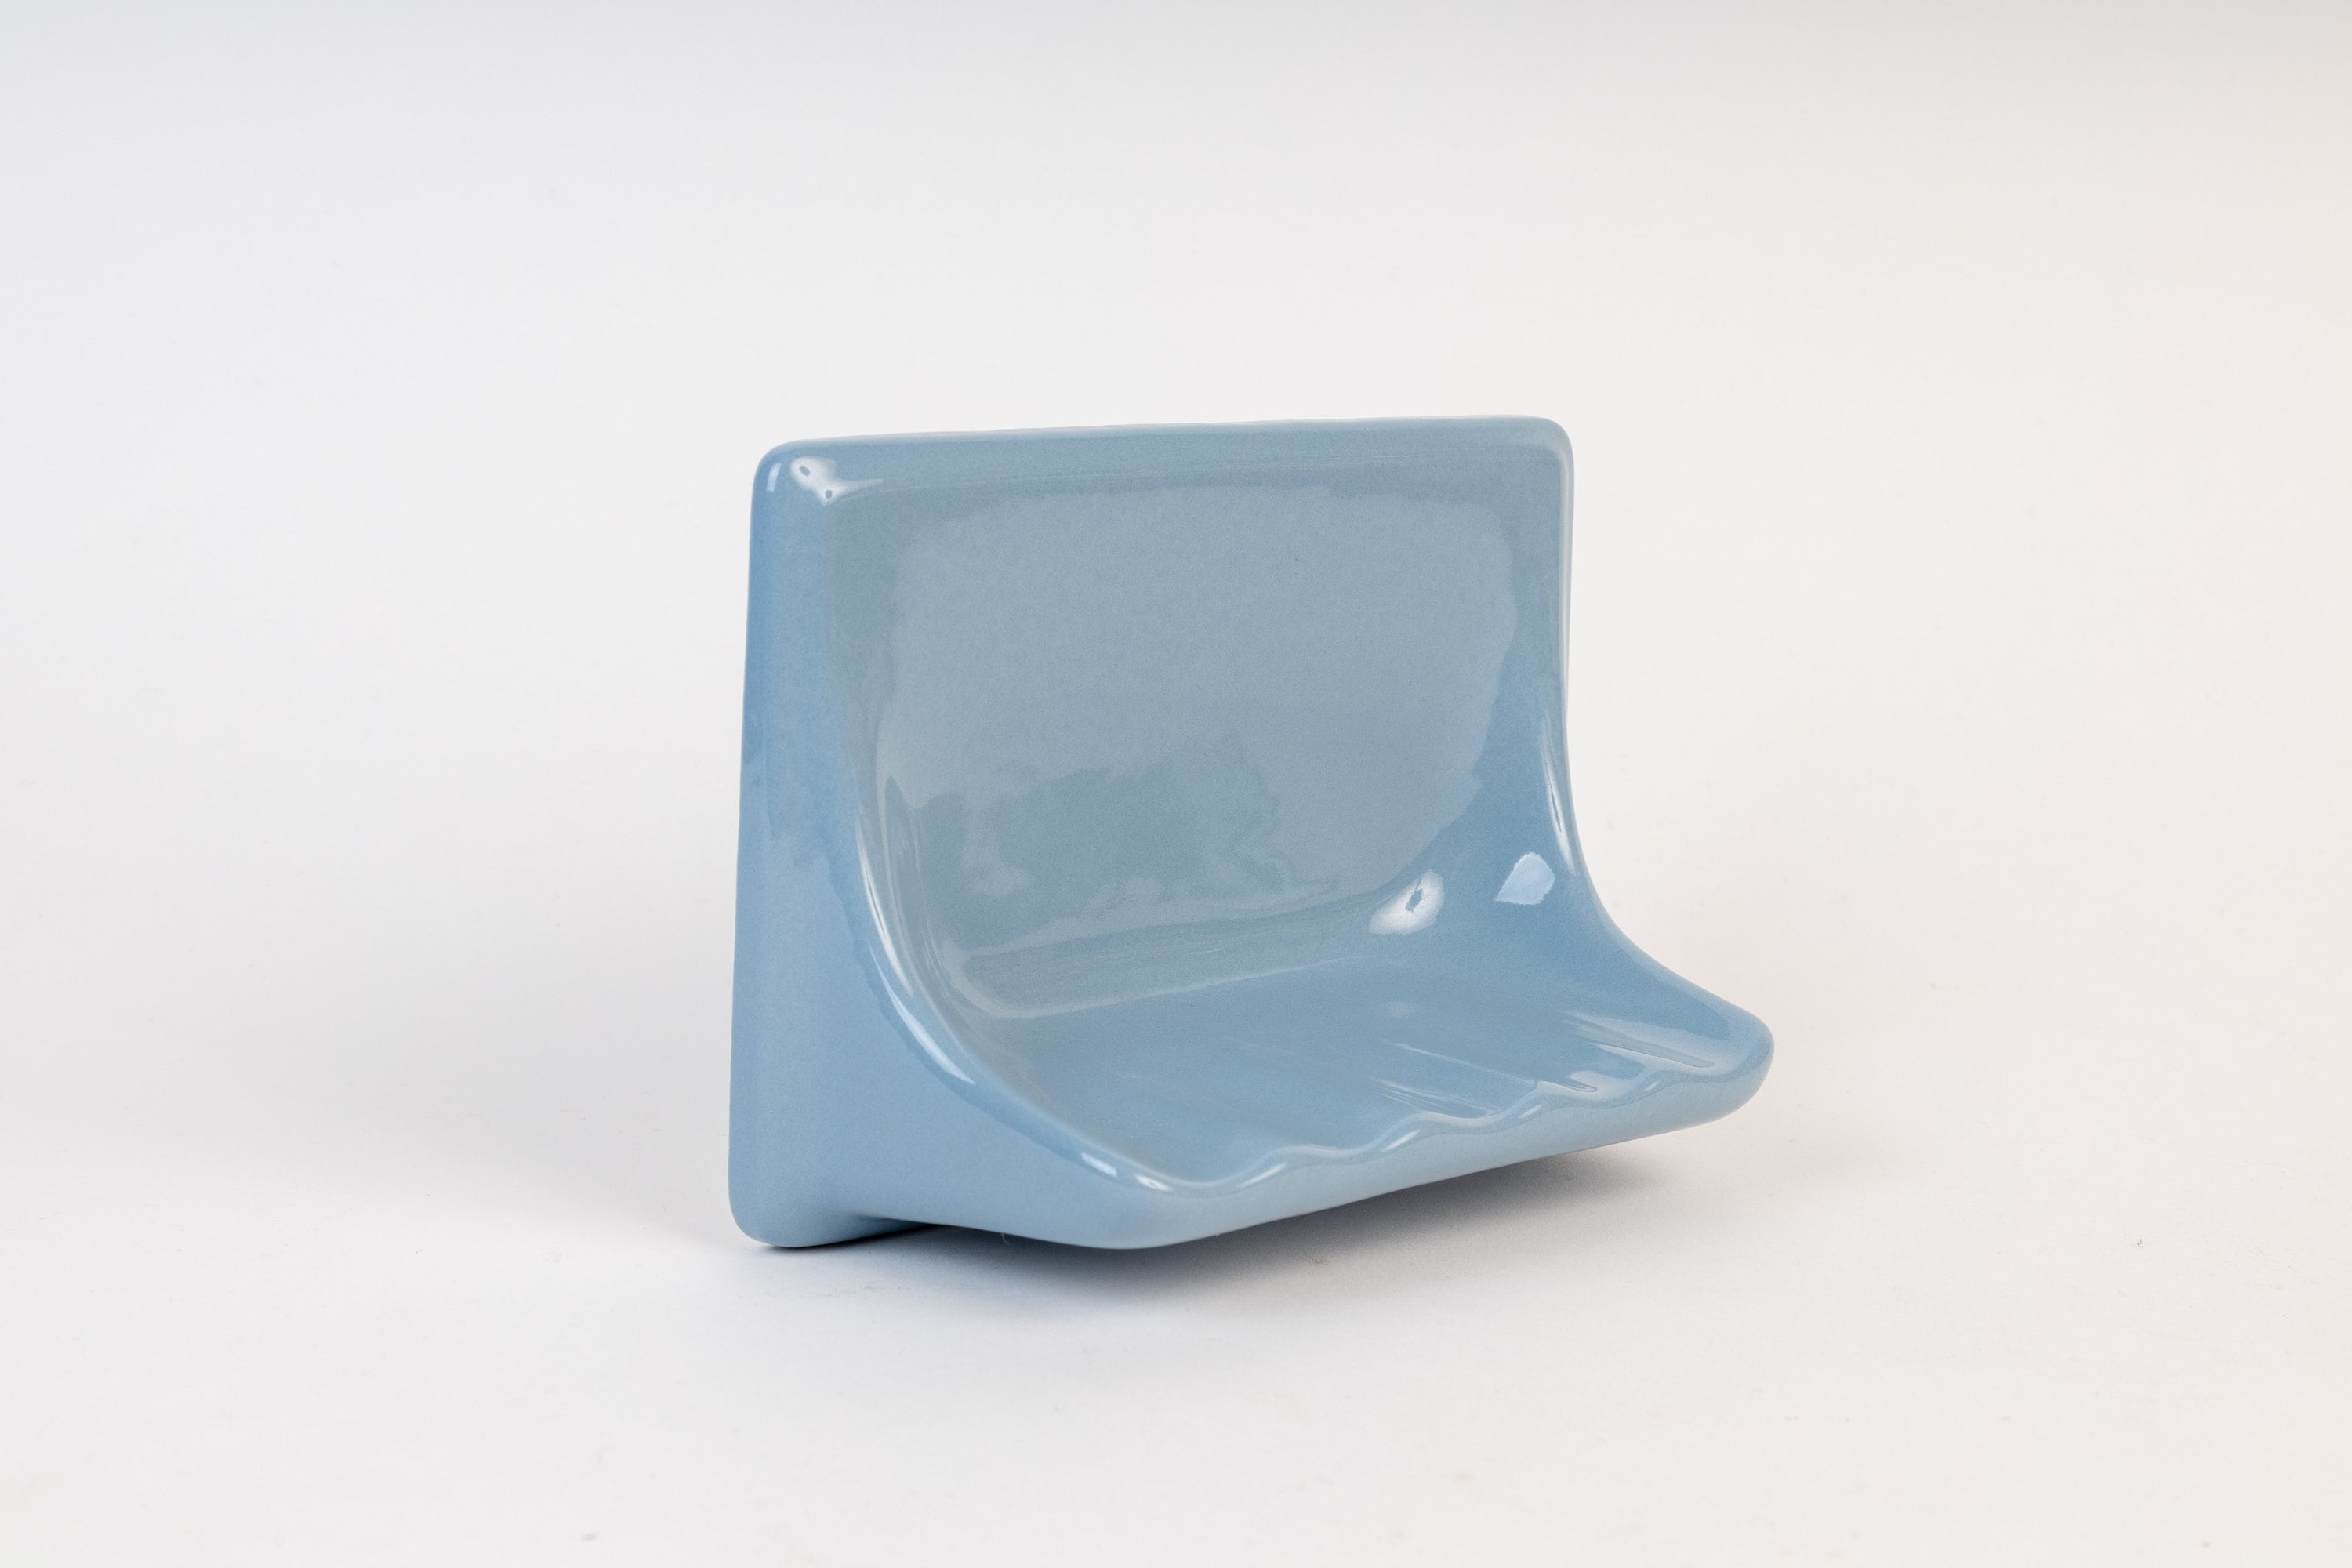 Vintage Light Sky Baby Blue Ceramic Tile-In Wall Bathroom Soap Dish Holder